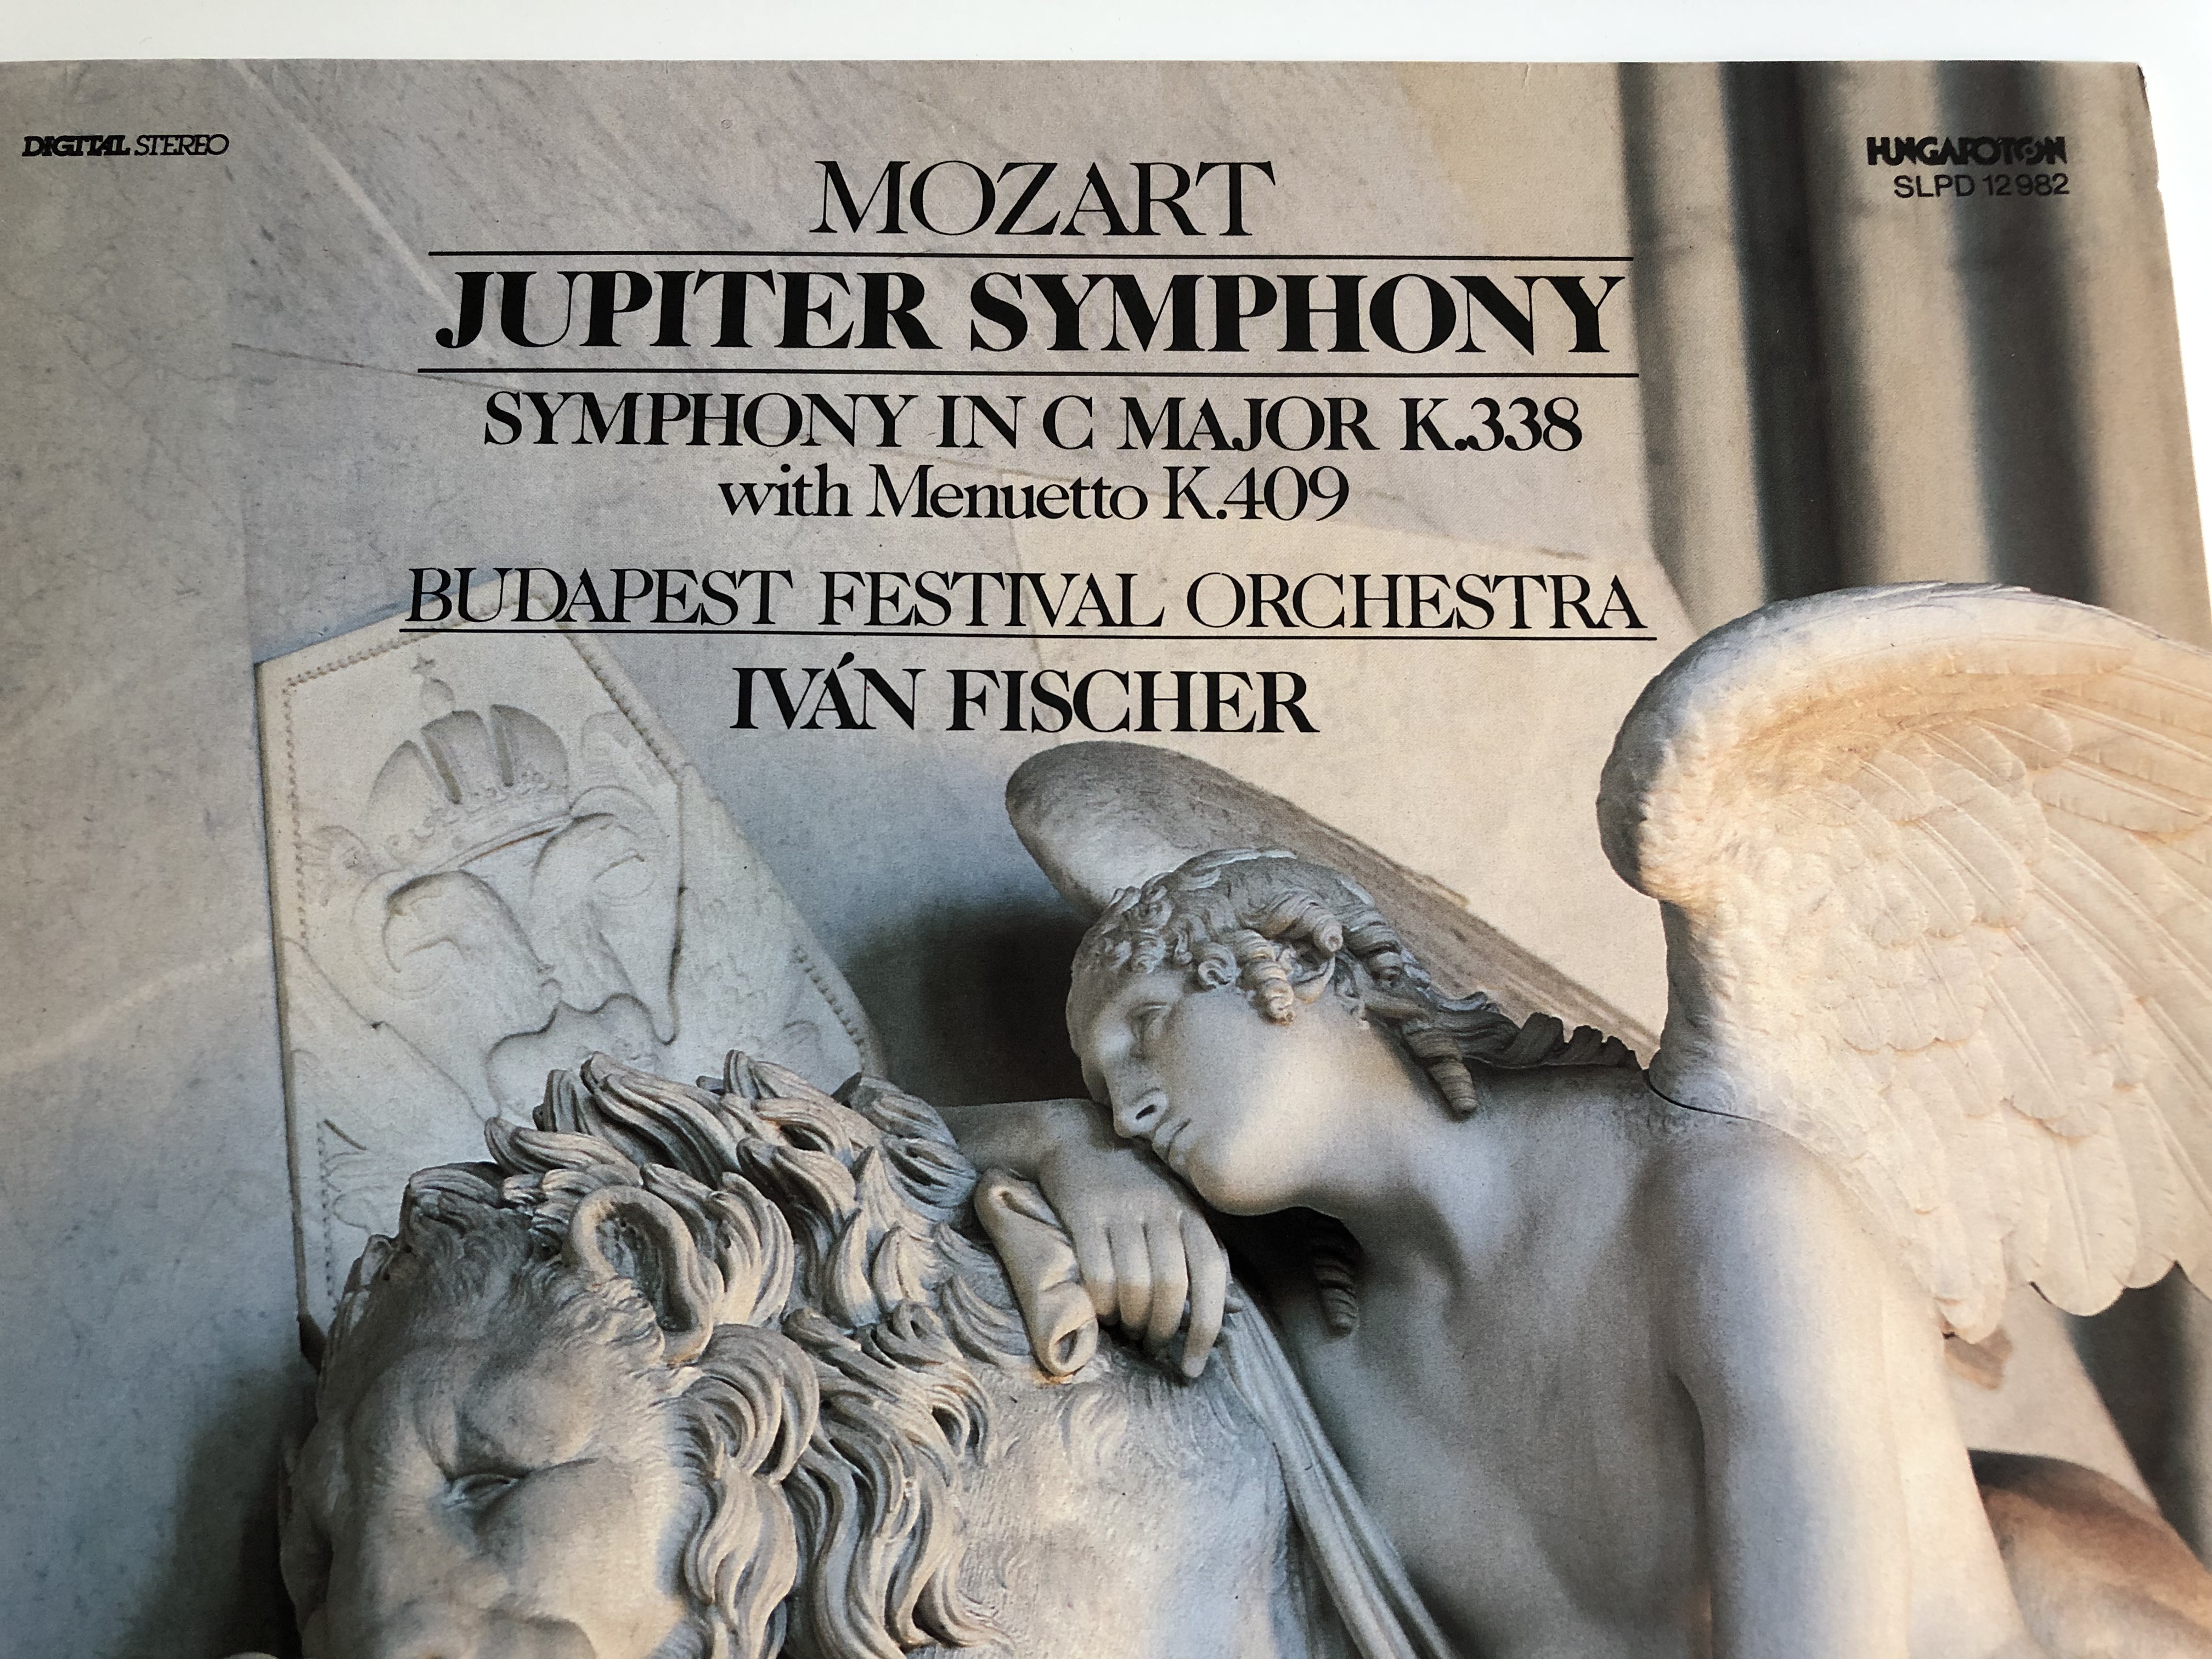 mozart-jupiter-symphony-symphony-in-c-major-k.338-with-menuetto-k.409-budapest-festival-orchestra-ivan-fischer-hungaroton-lp-digital-stereo-slpd-12982-2-.jpg